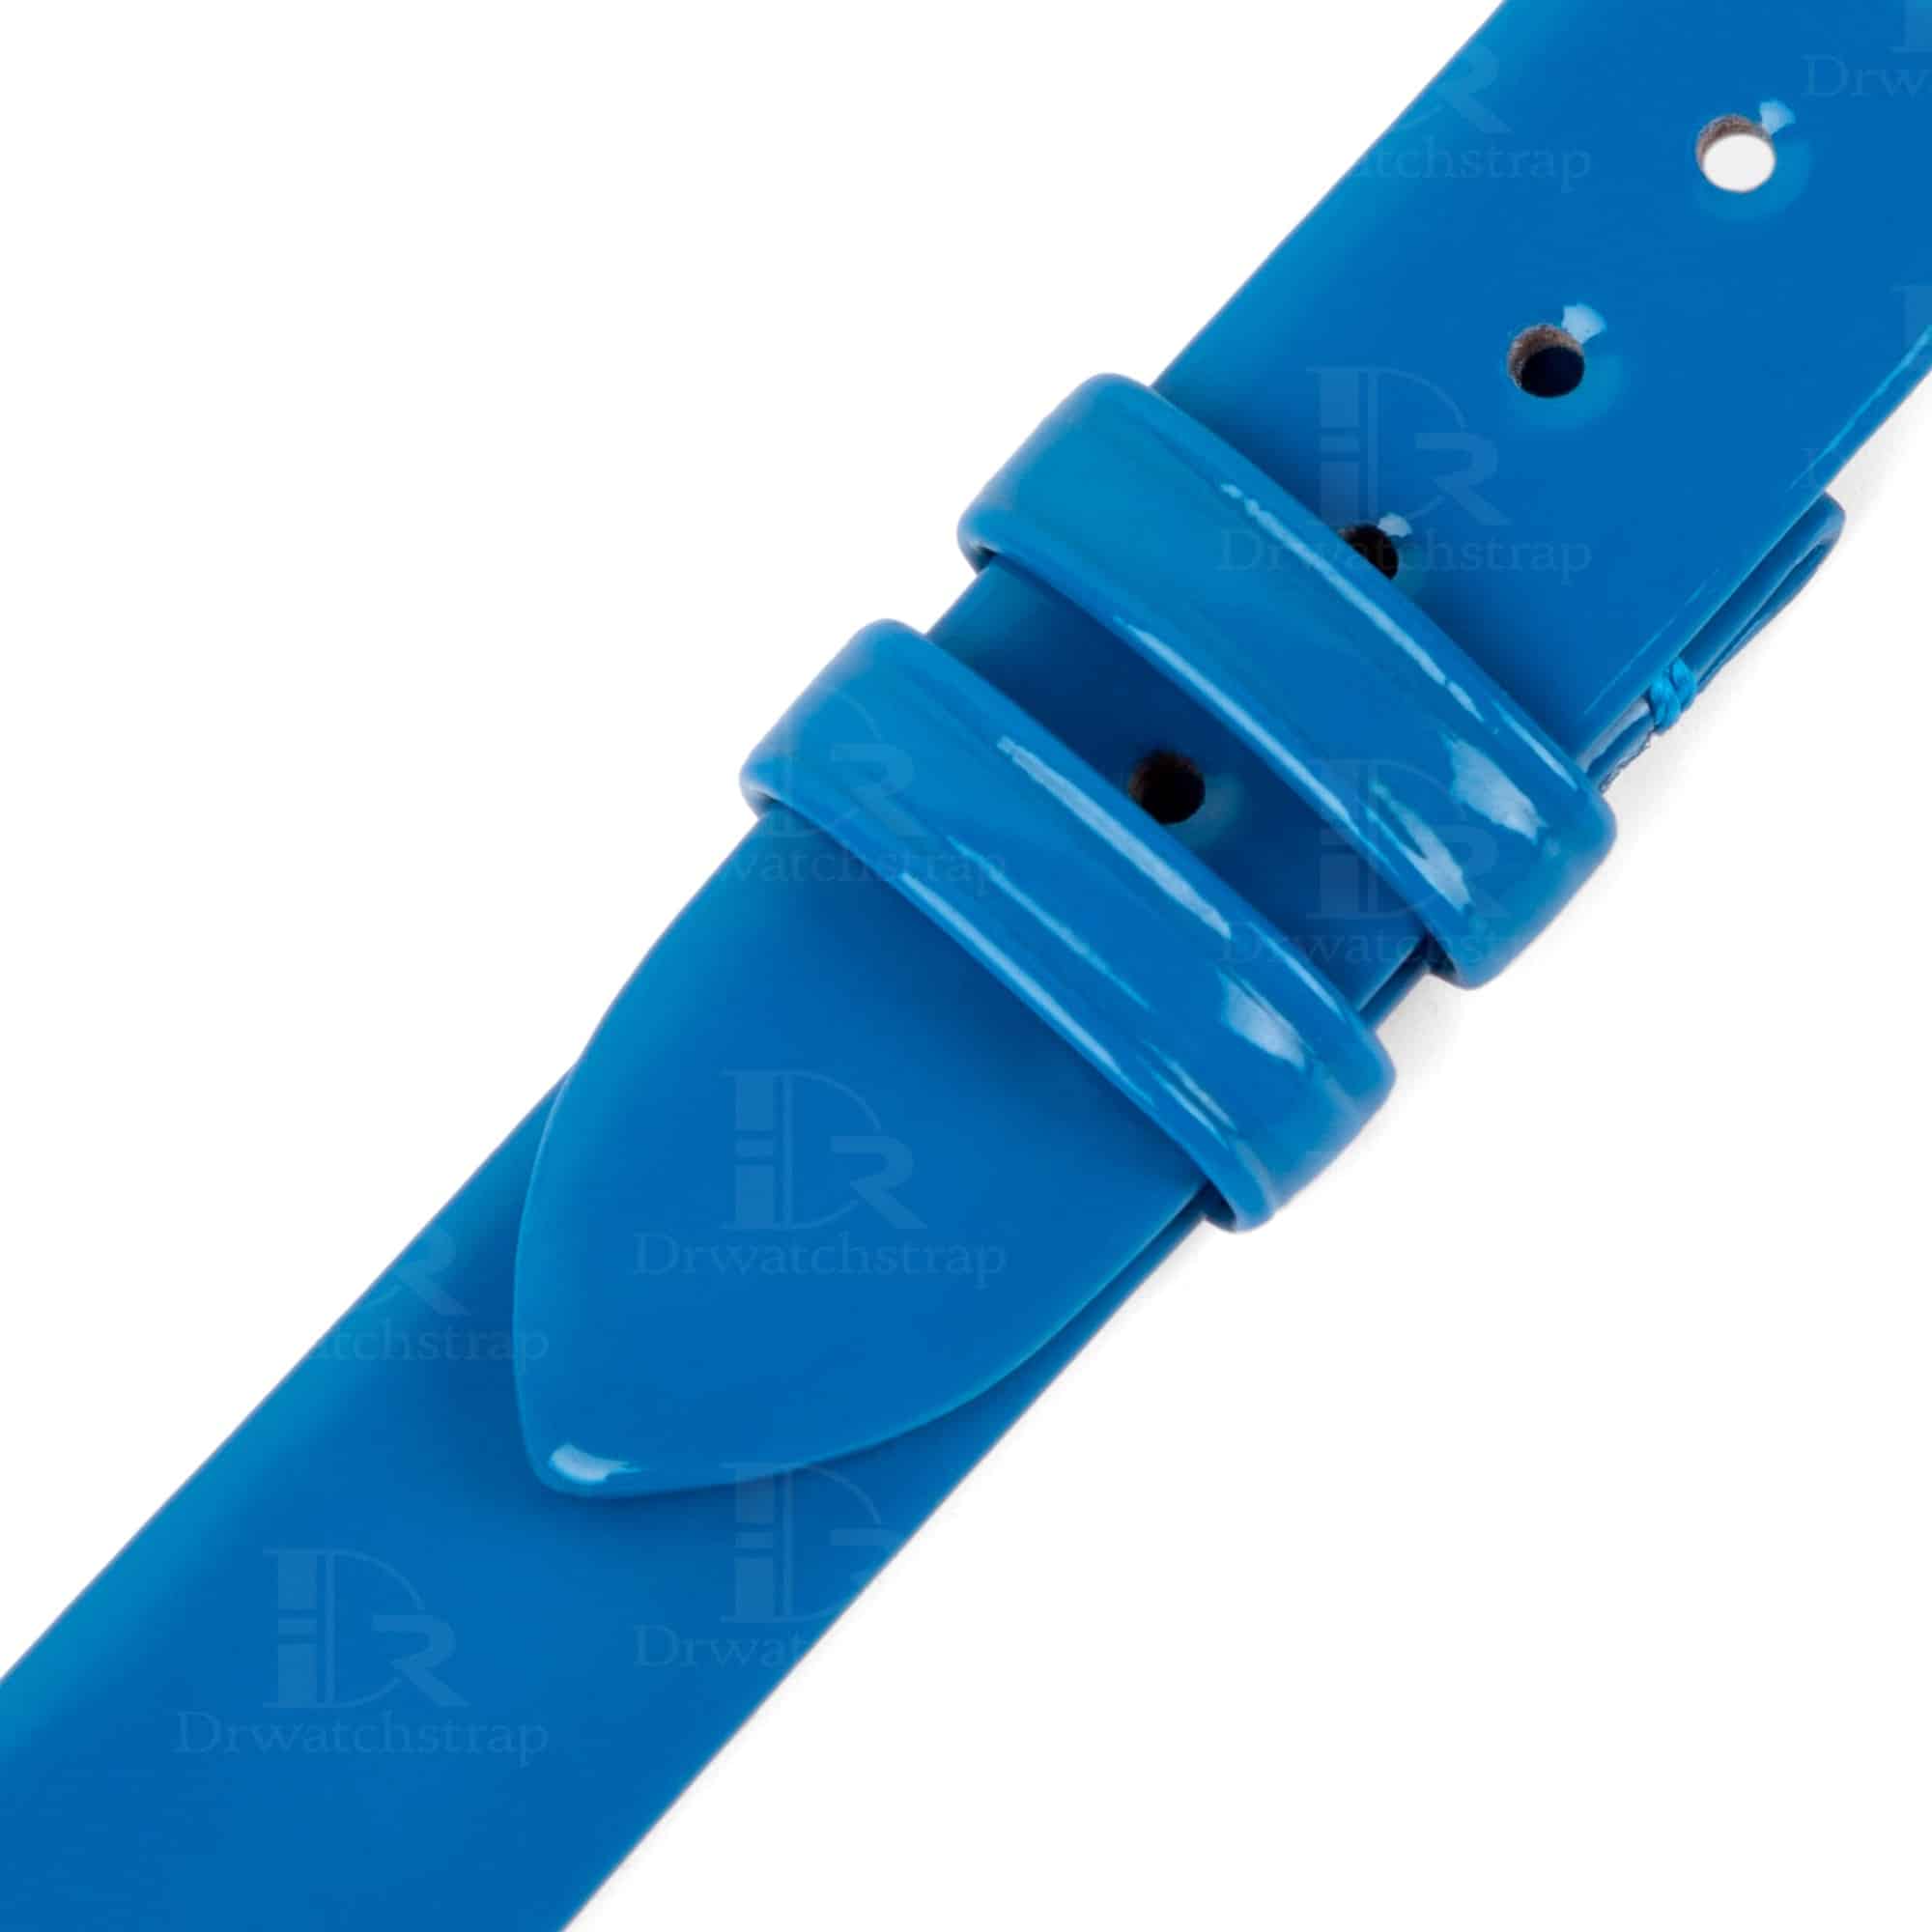 Buy Bulgari Zero 1 leather watch band replacement